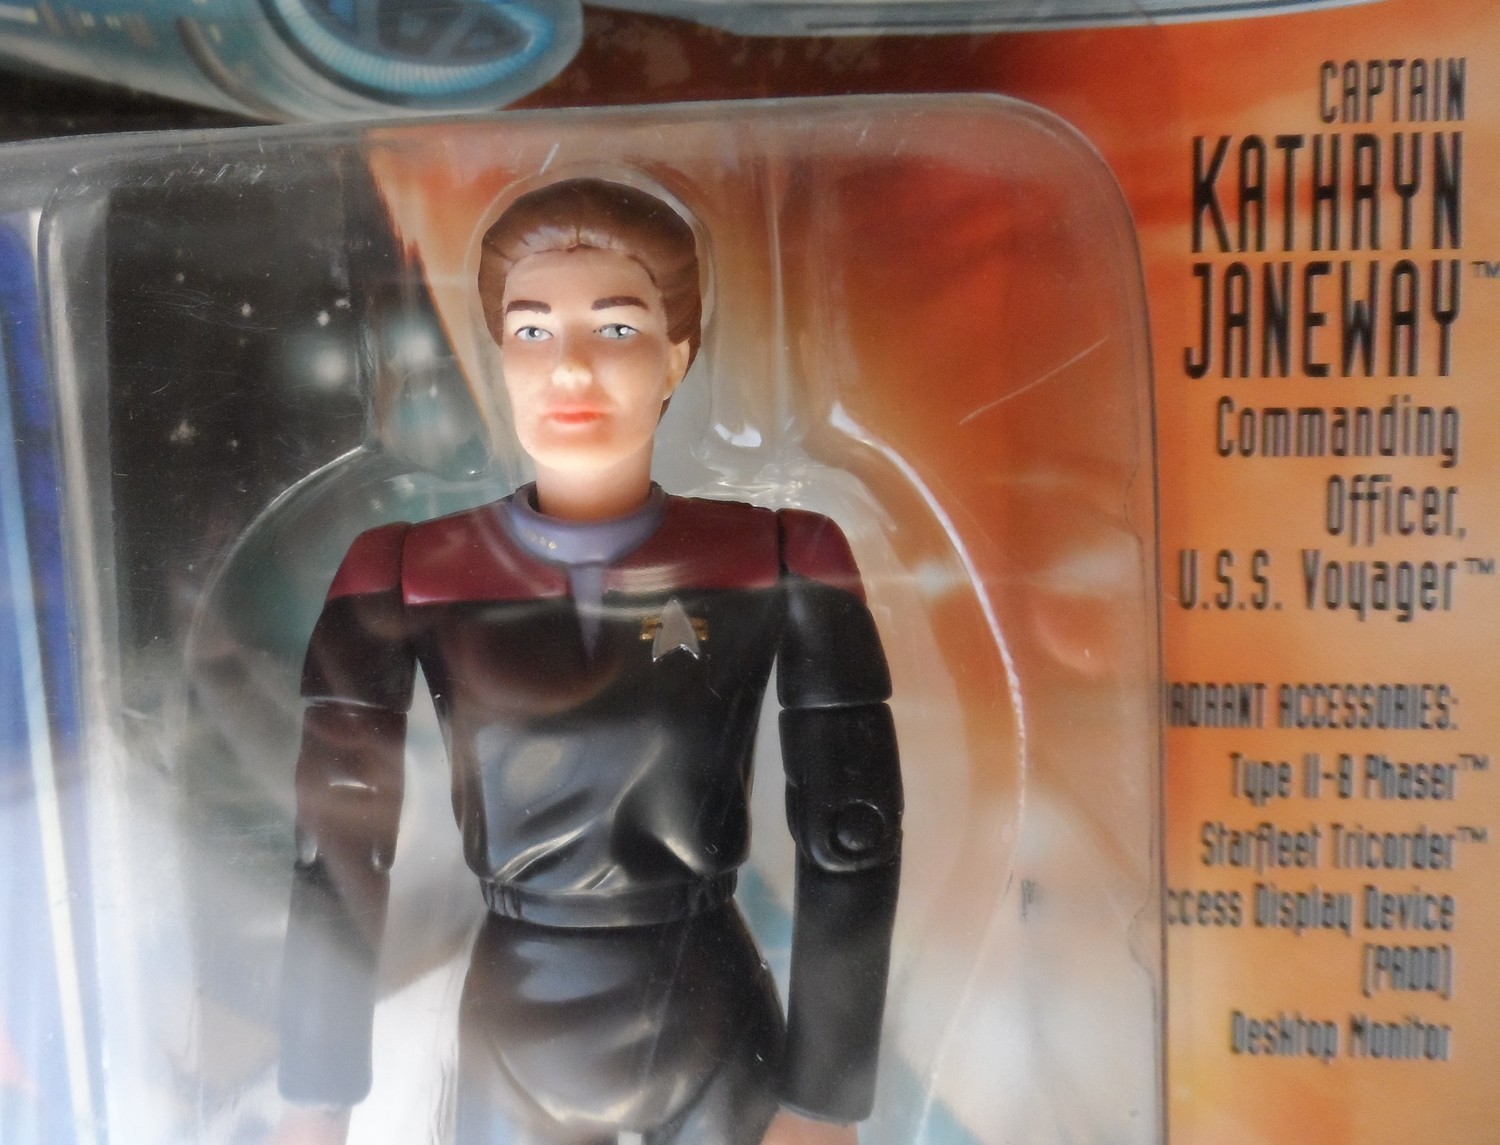 Star Trek Voyager Figure - Captain Kathryn Janeway